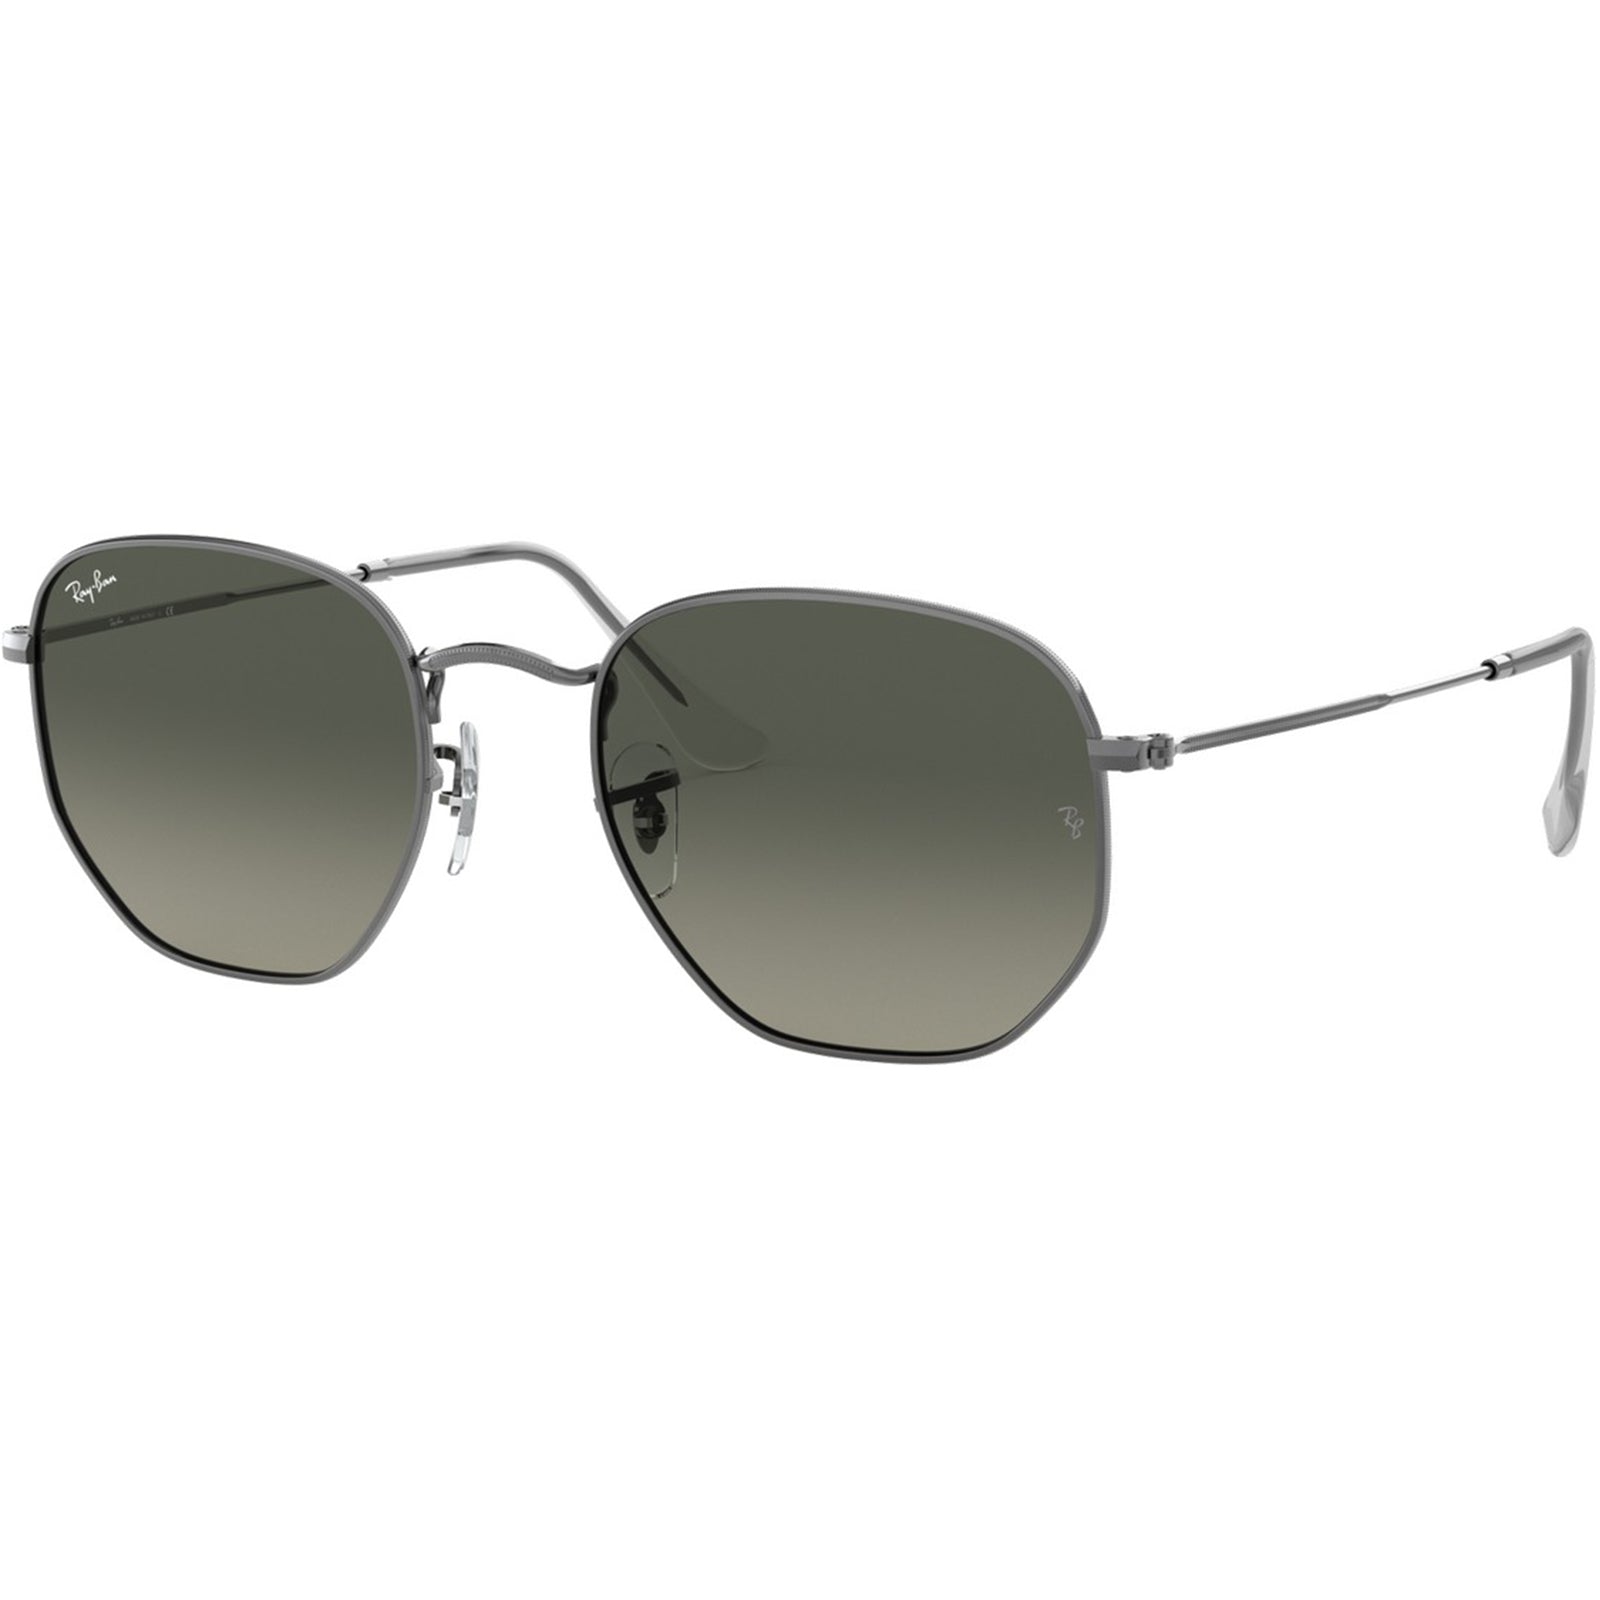 Ray-Ban Hexagonal Flat Lenses Adult Lifestyle Sunglasses-0RB3548N